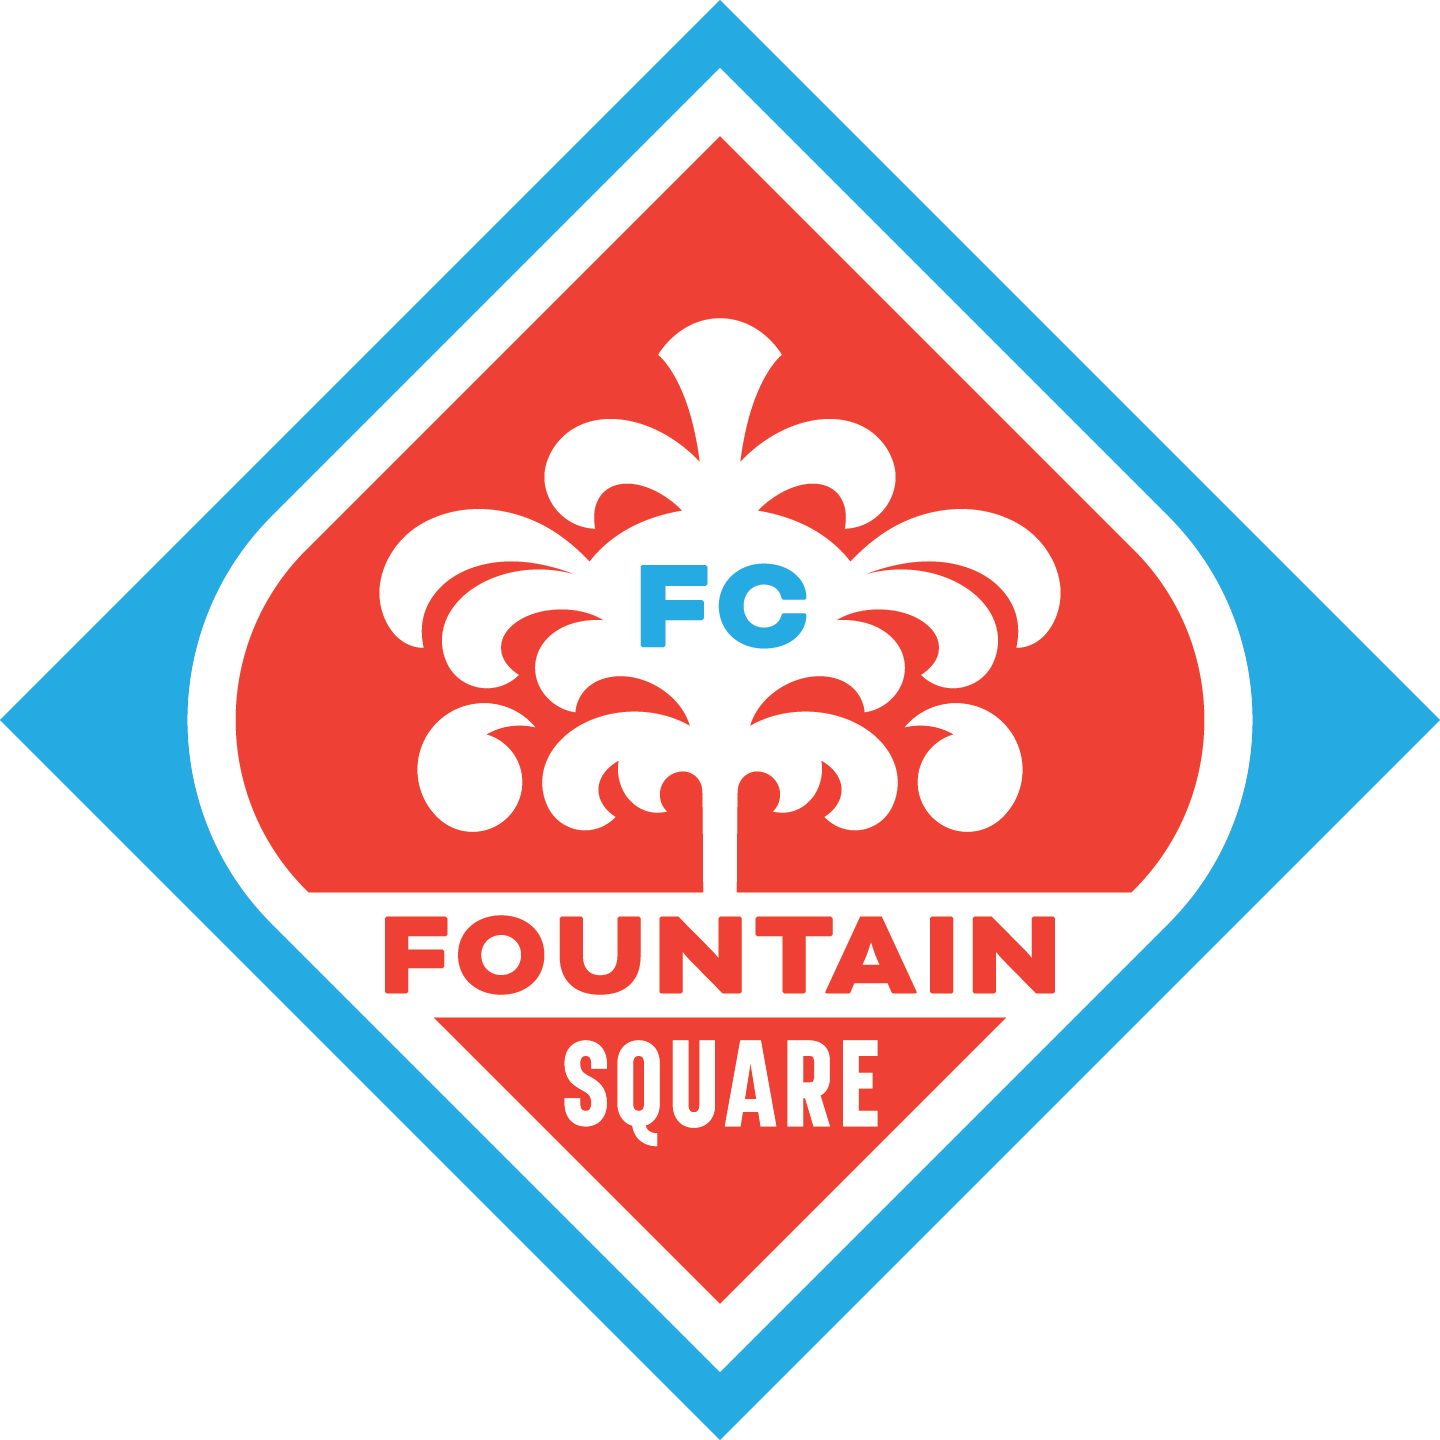 FC Fountain Square Team Sponsorships